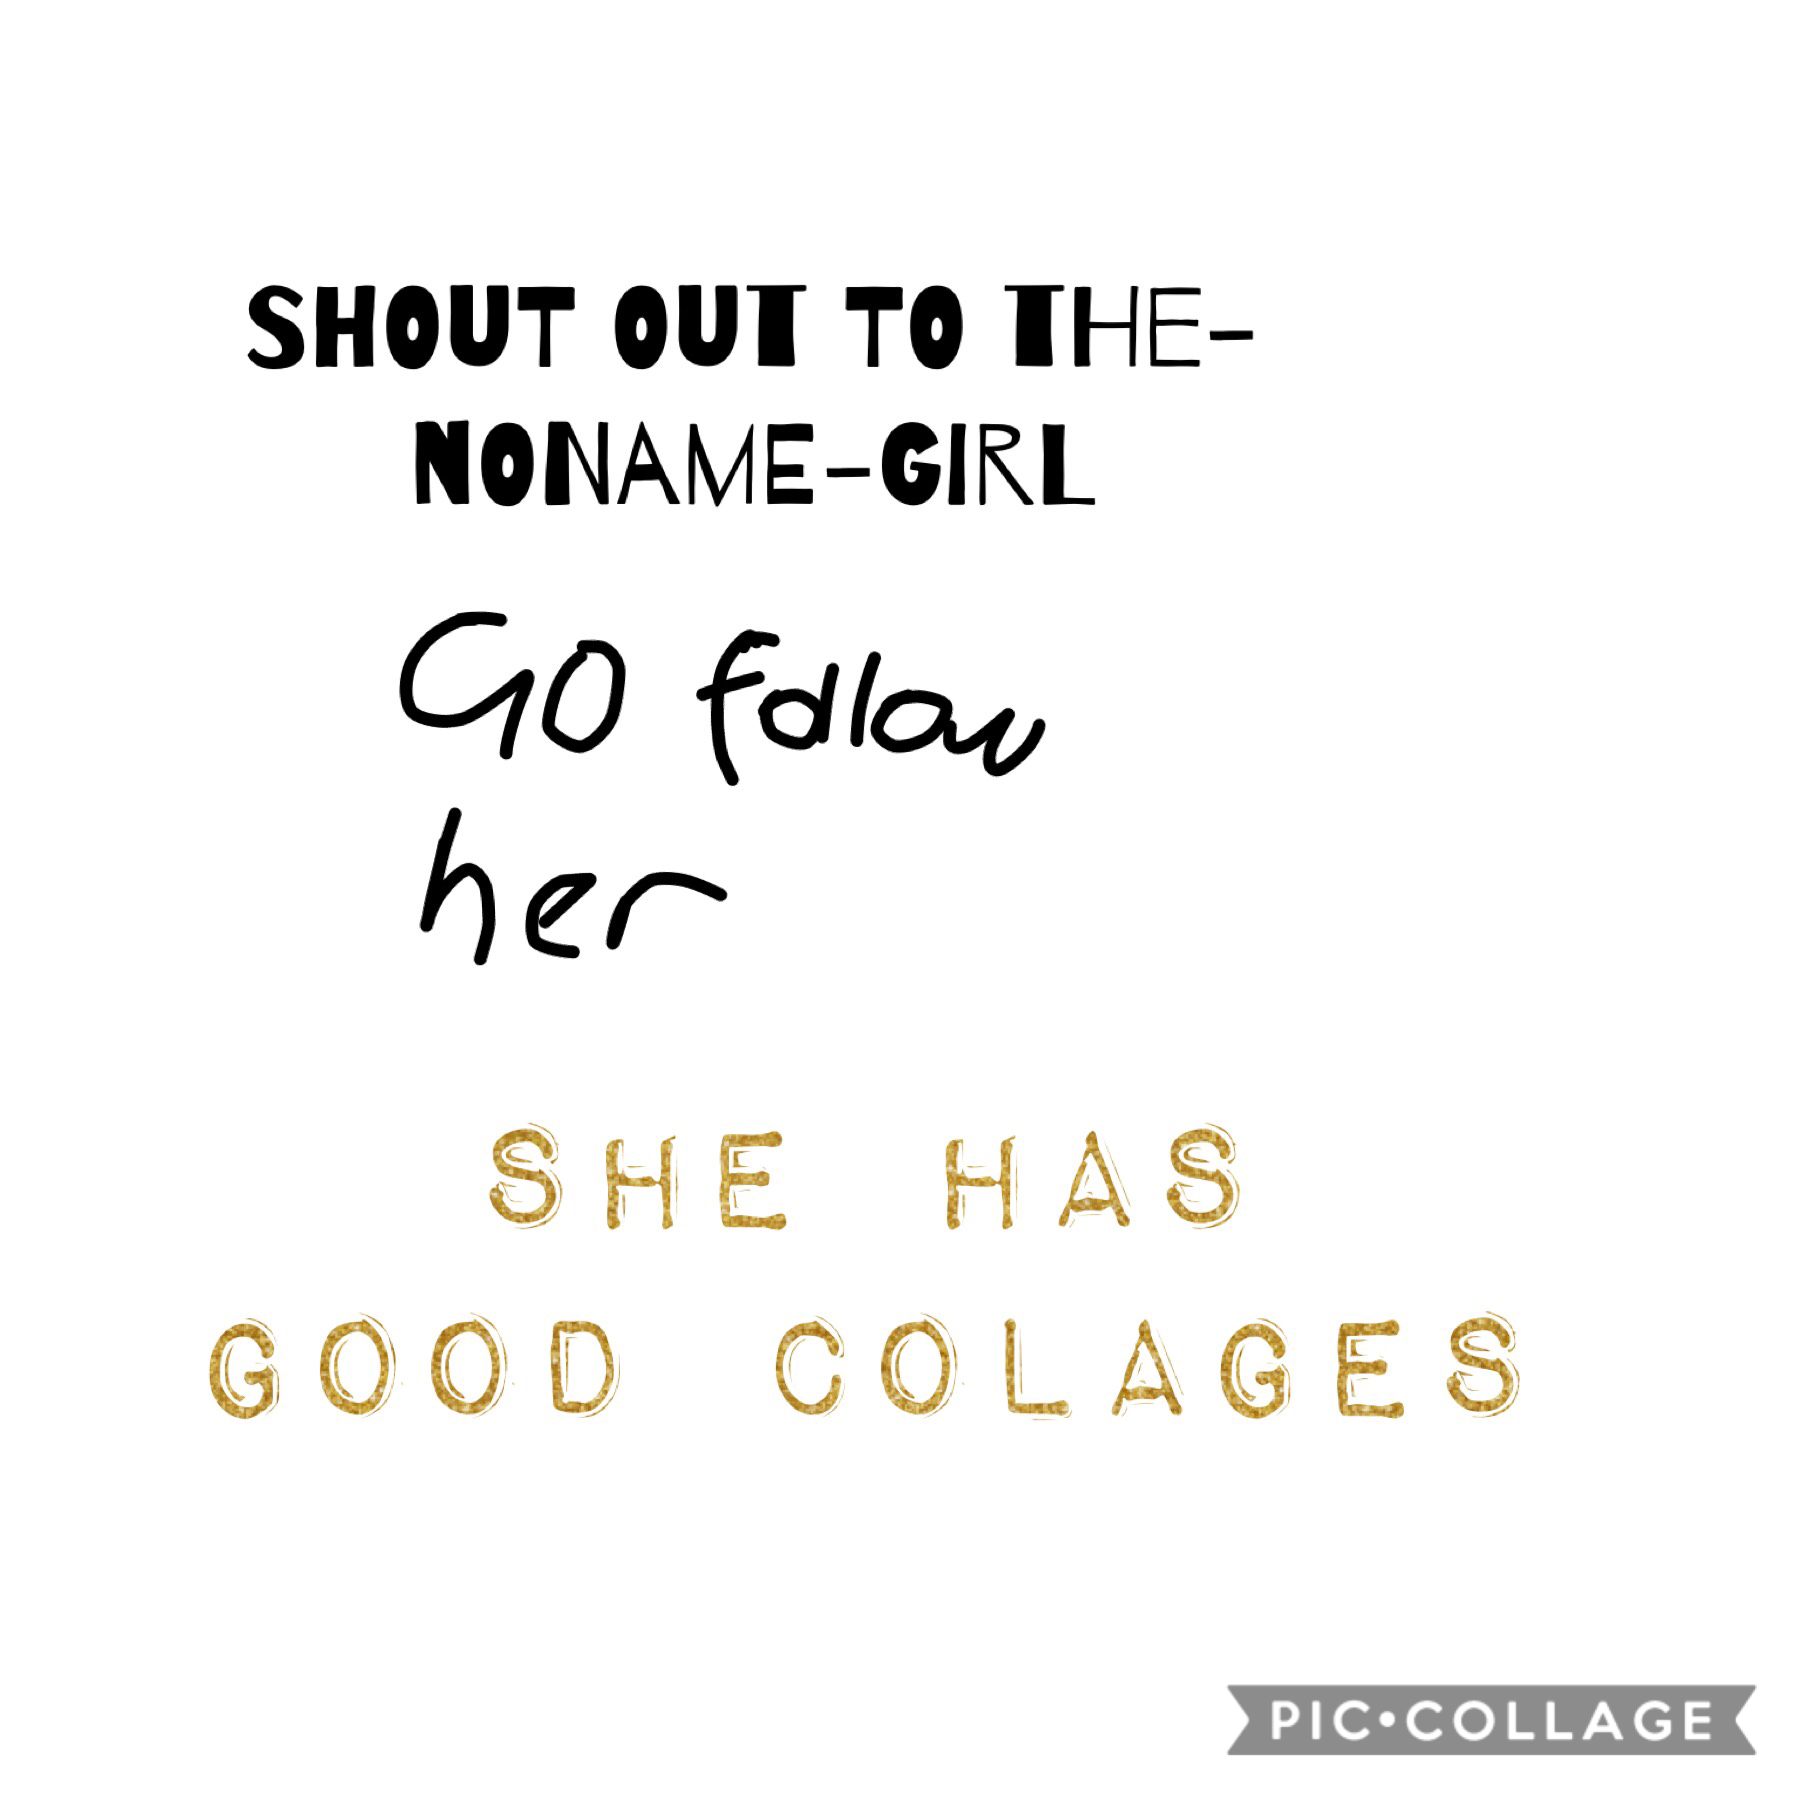 Go and follow the-noname-girl please